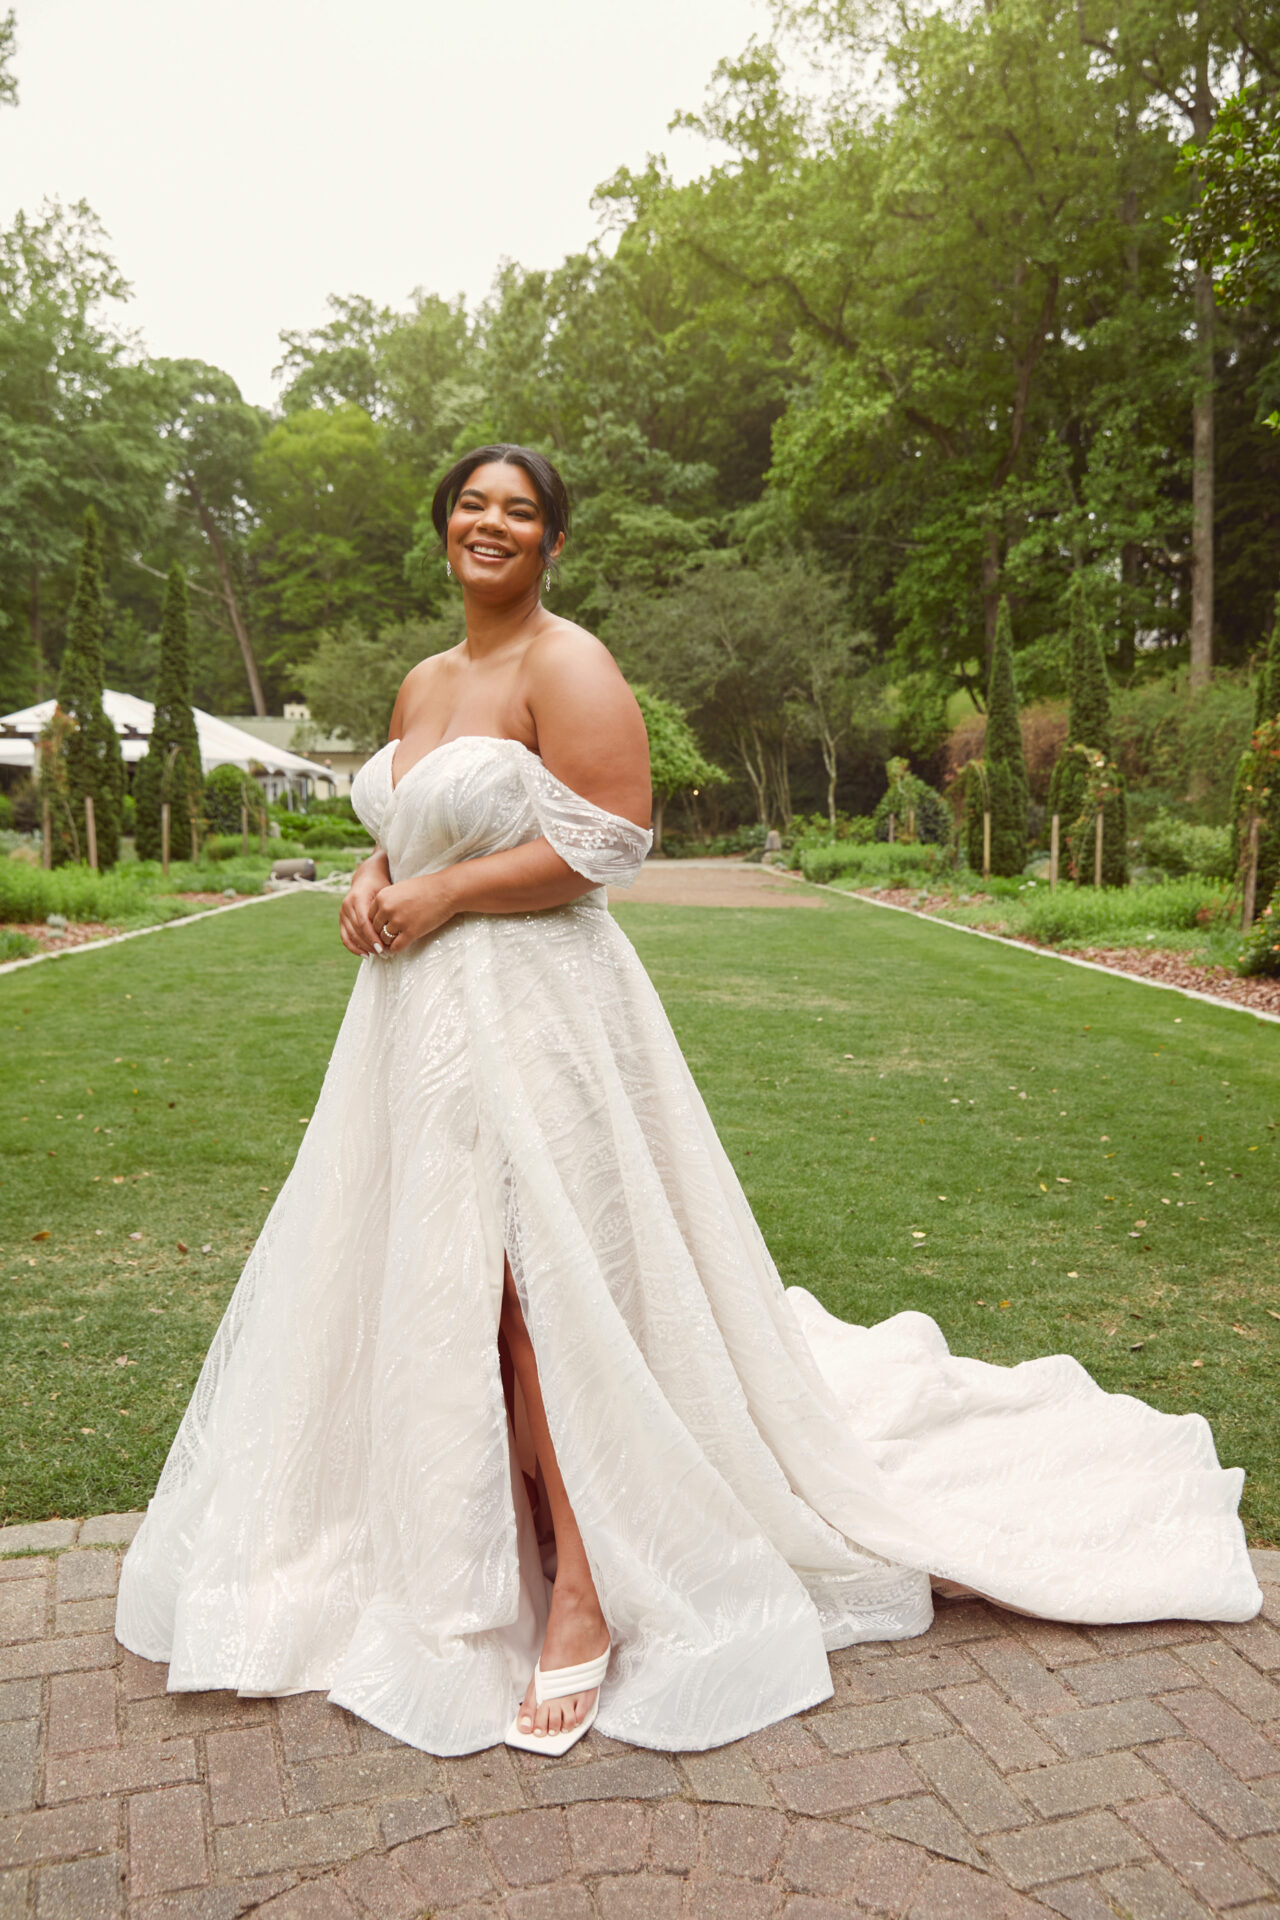 A-line Wedding Dress With Front Slit Kleinfeld Bridal, 52% OFF